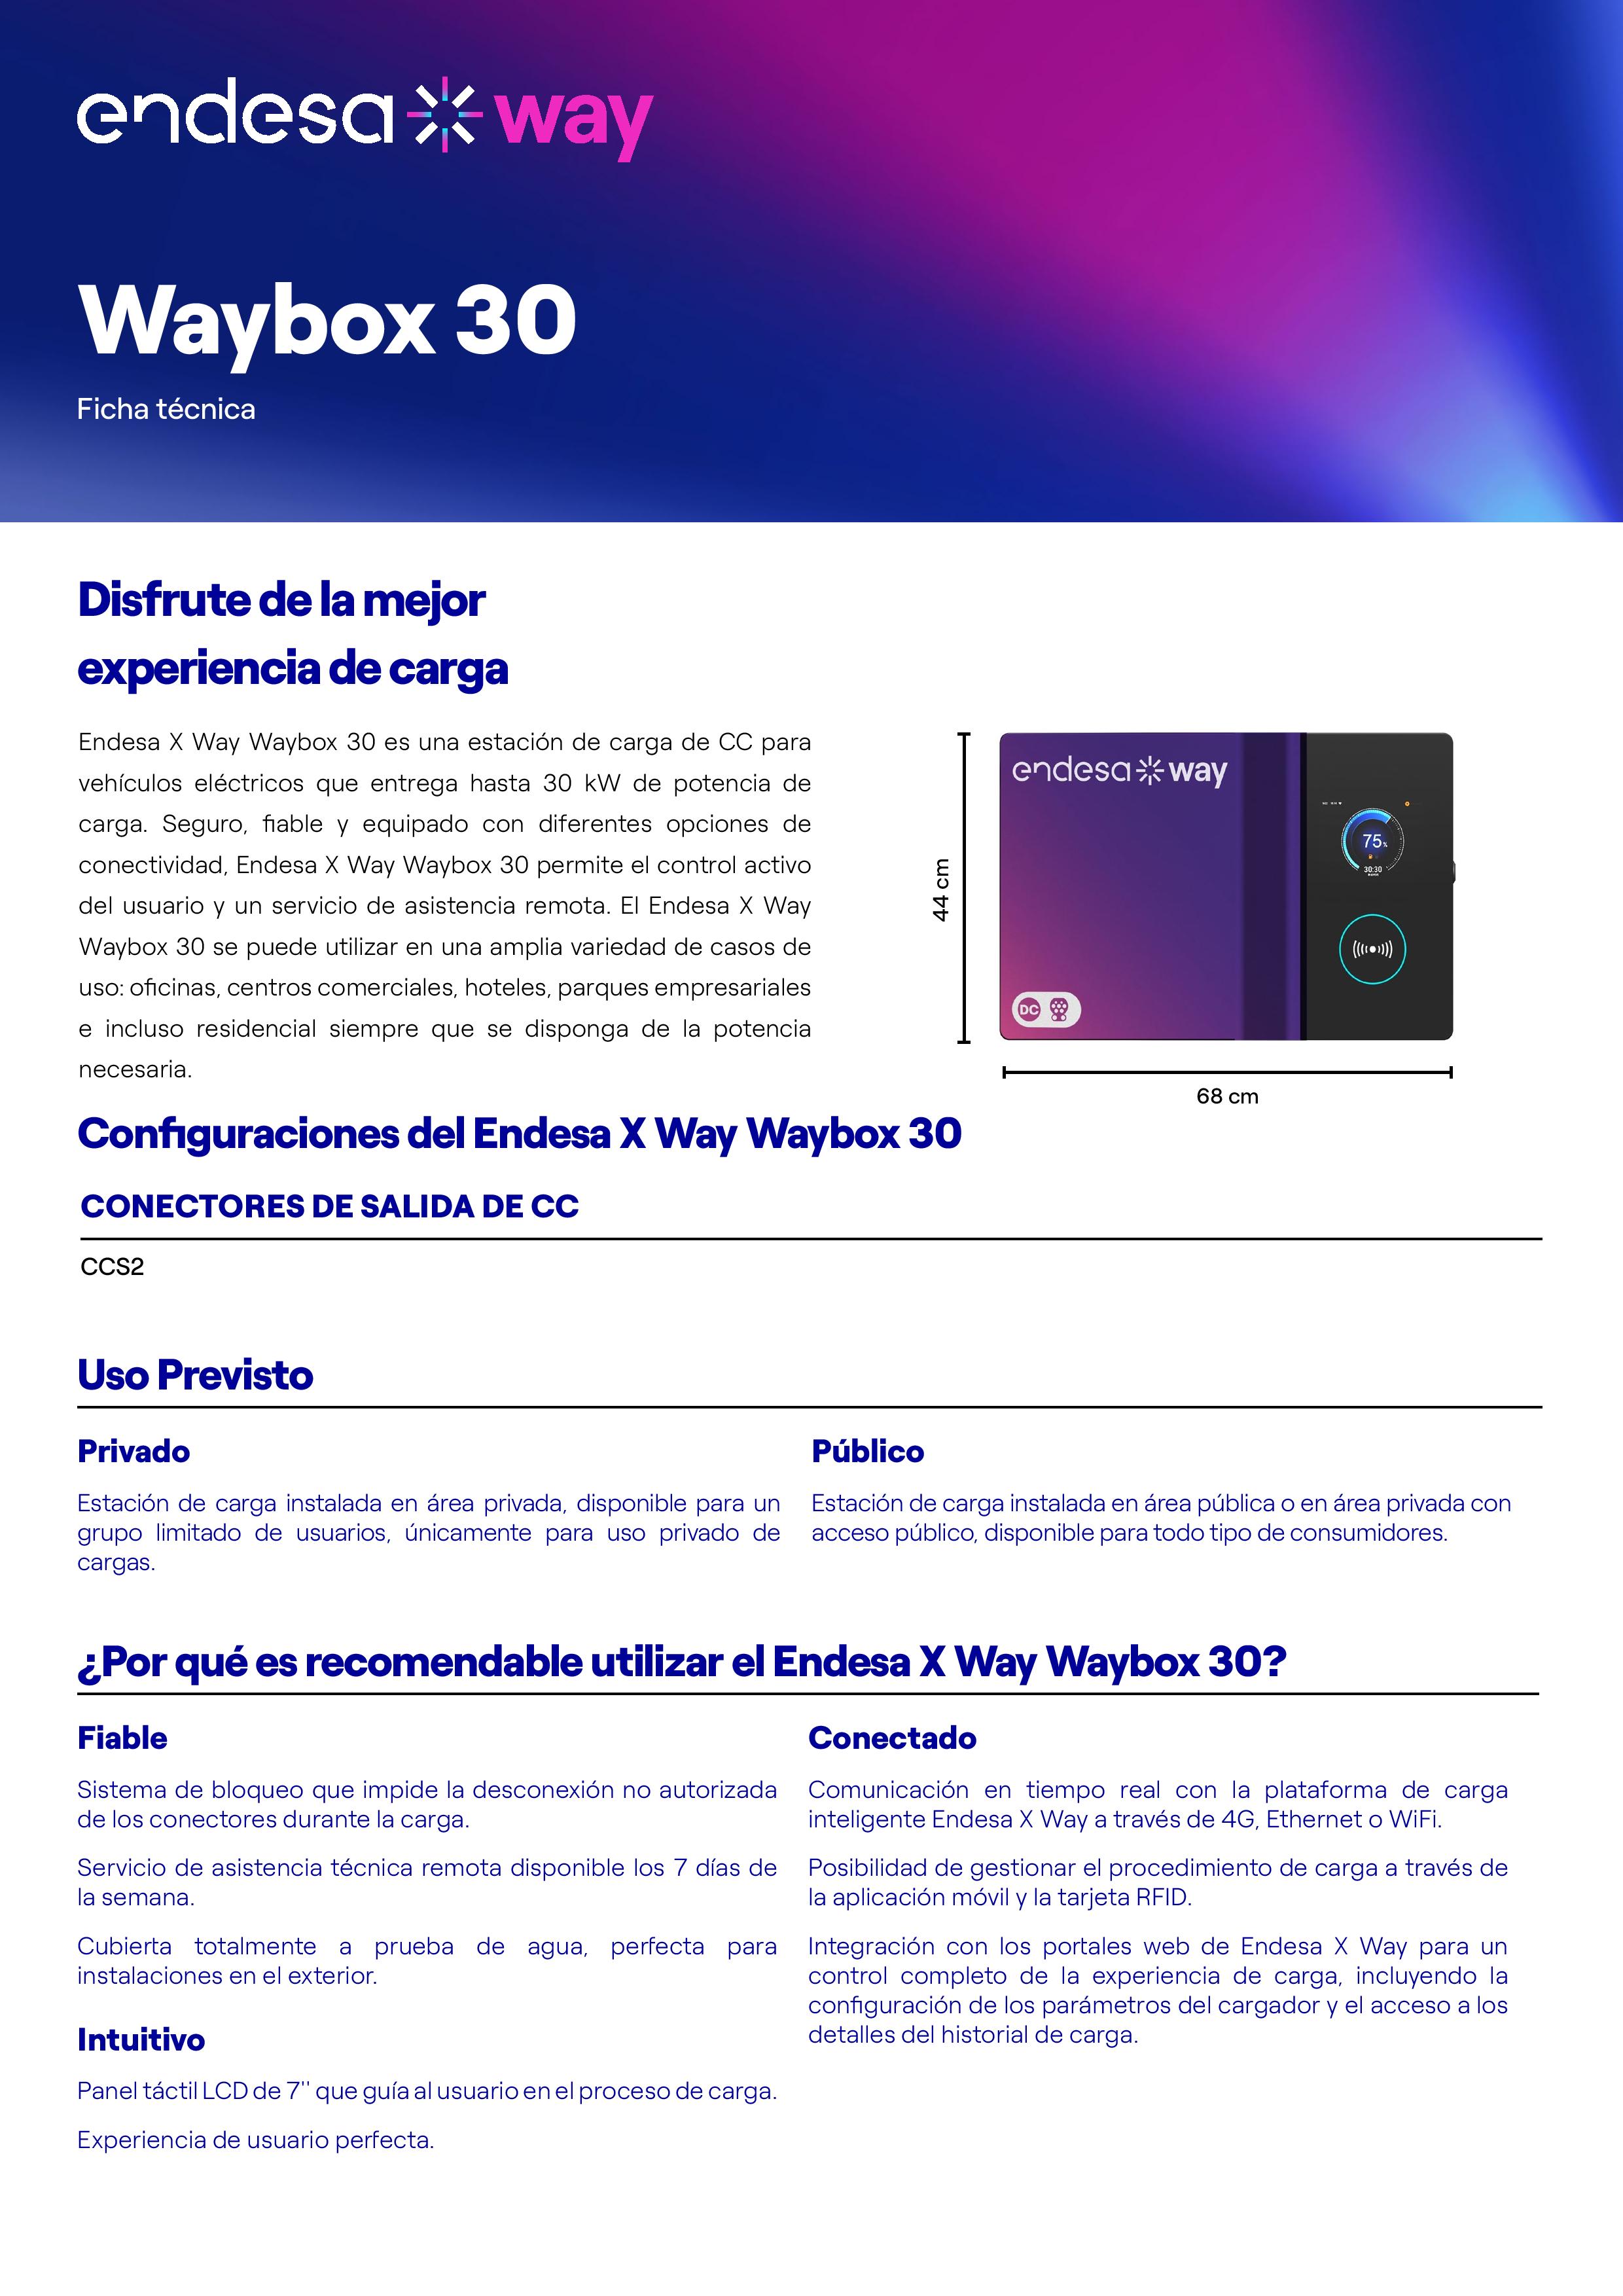 Endesa_X_Way_Waybox_30_ES_web-page-001.jpg